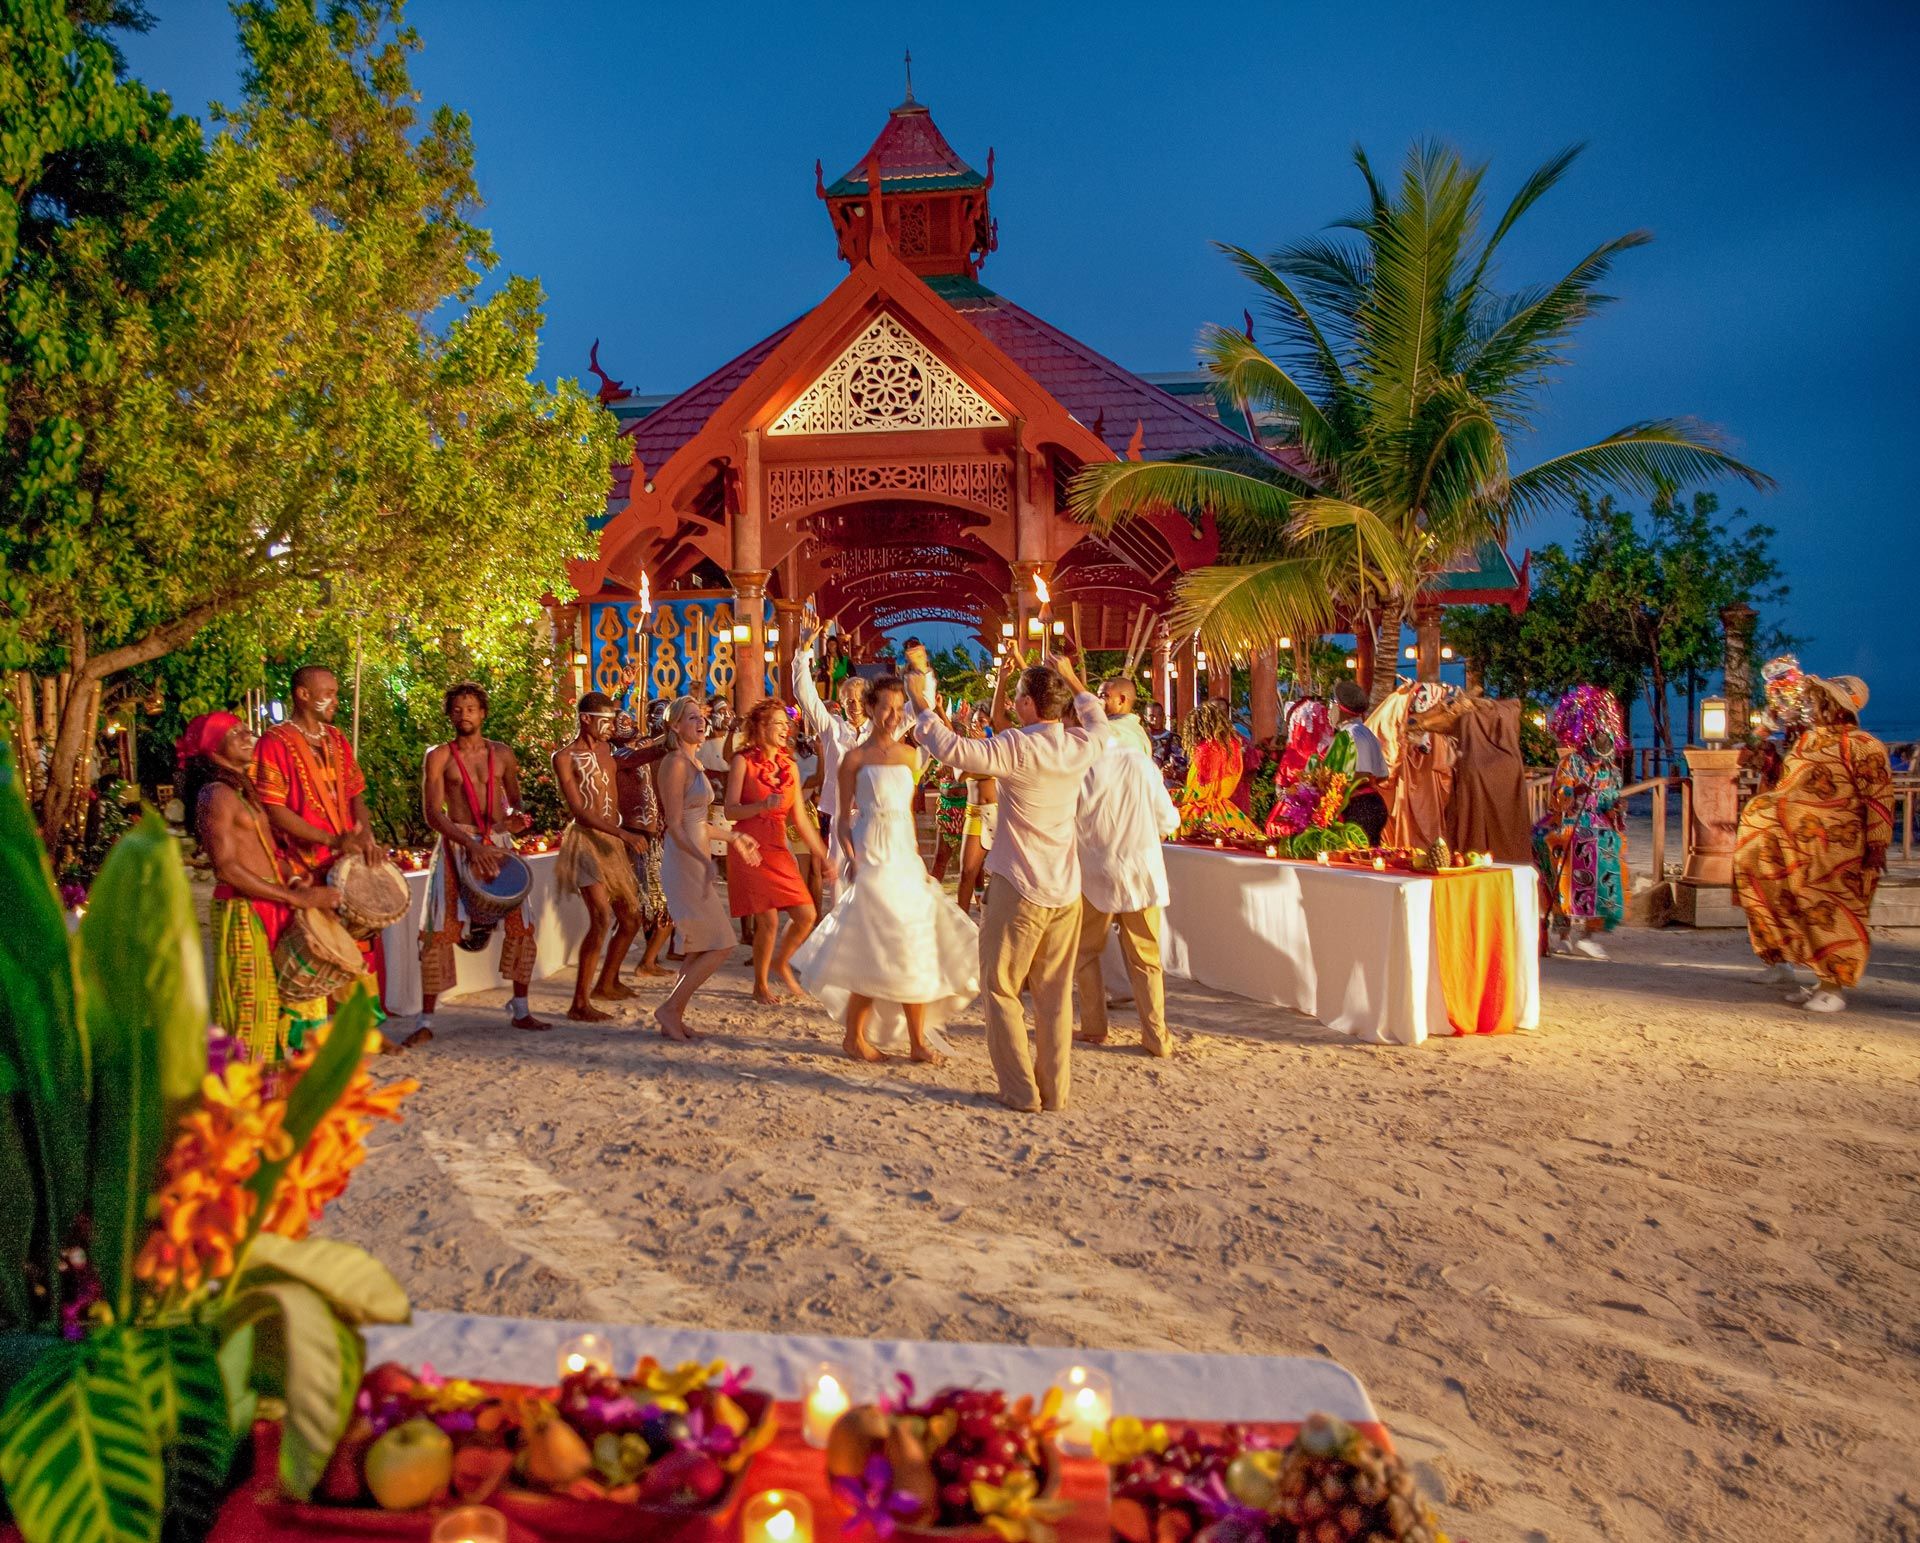 Sandals Royal Caribbean Island Reception